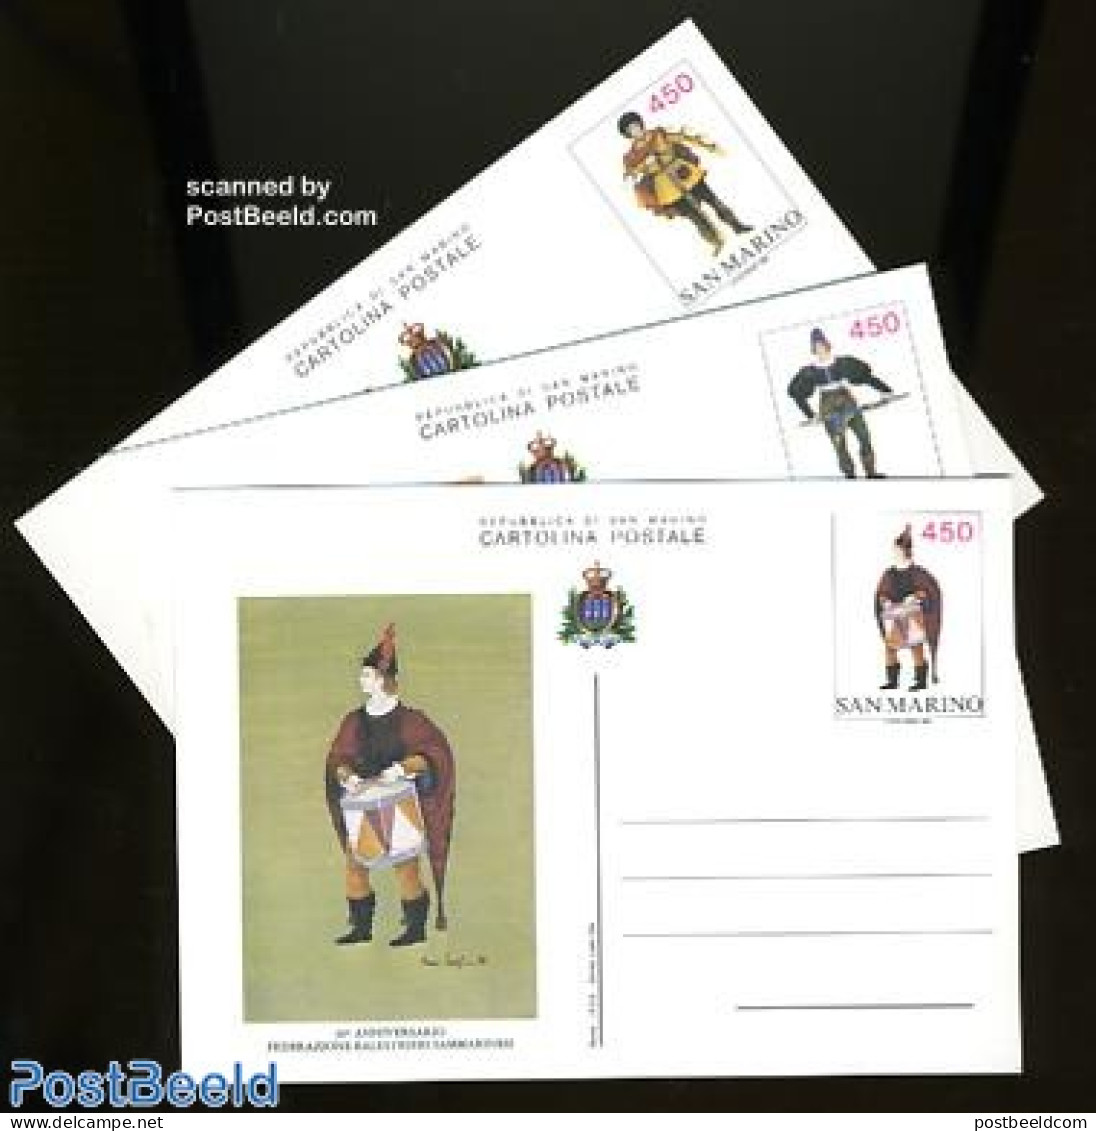 San Marino 1986 Postcard Set 450L, Uniforms (3 Cards), Unused Postal Stationary, Various - Uniforms - Covers & Documents